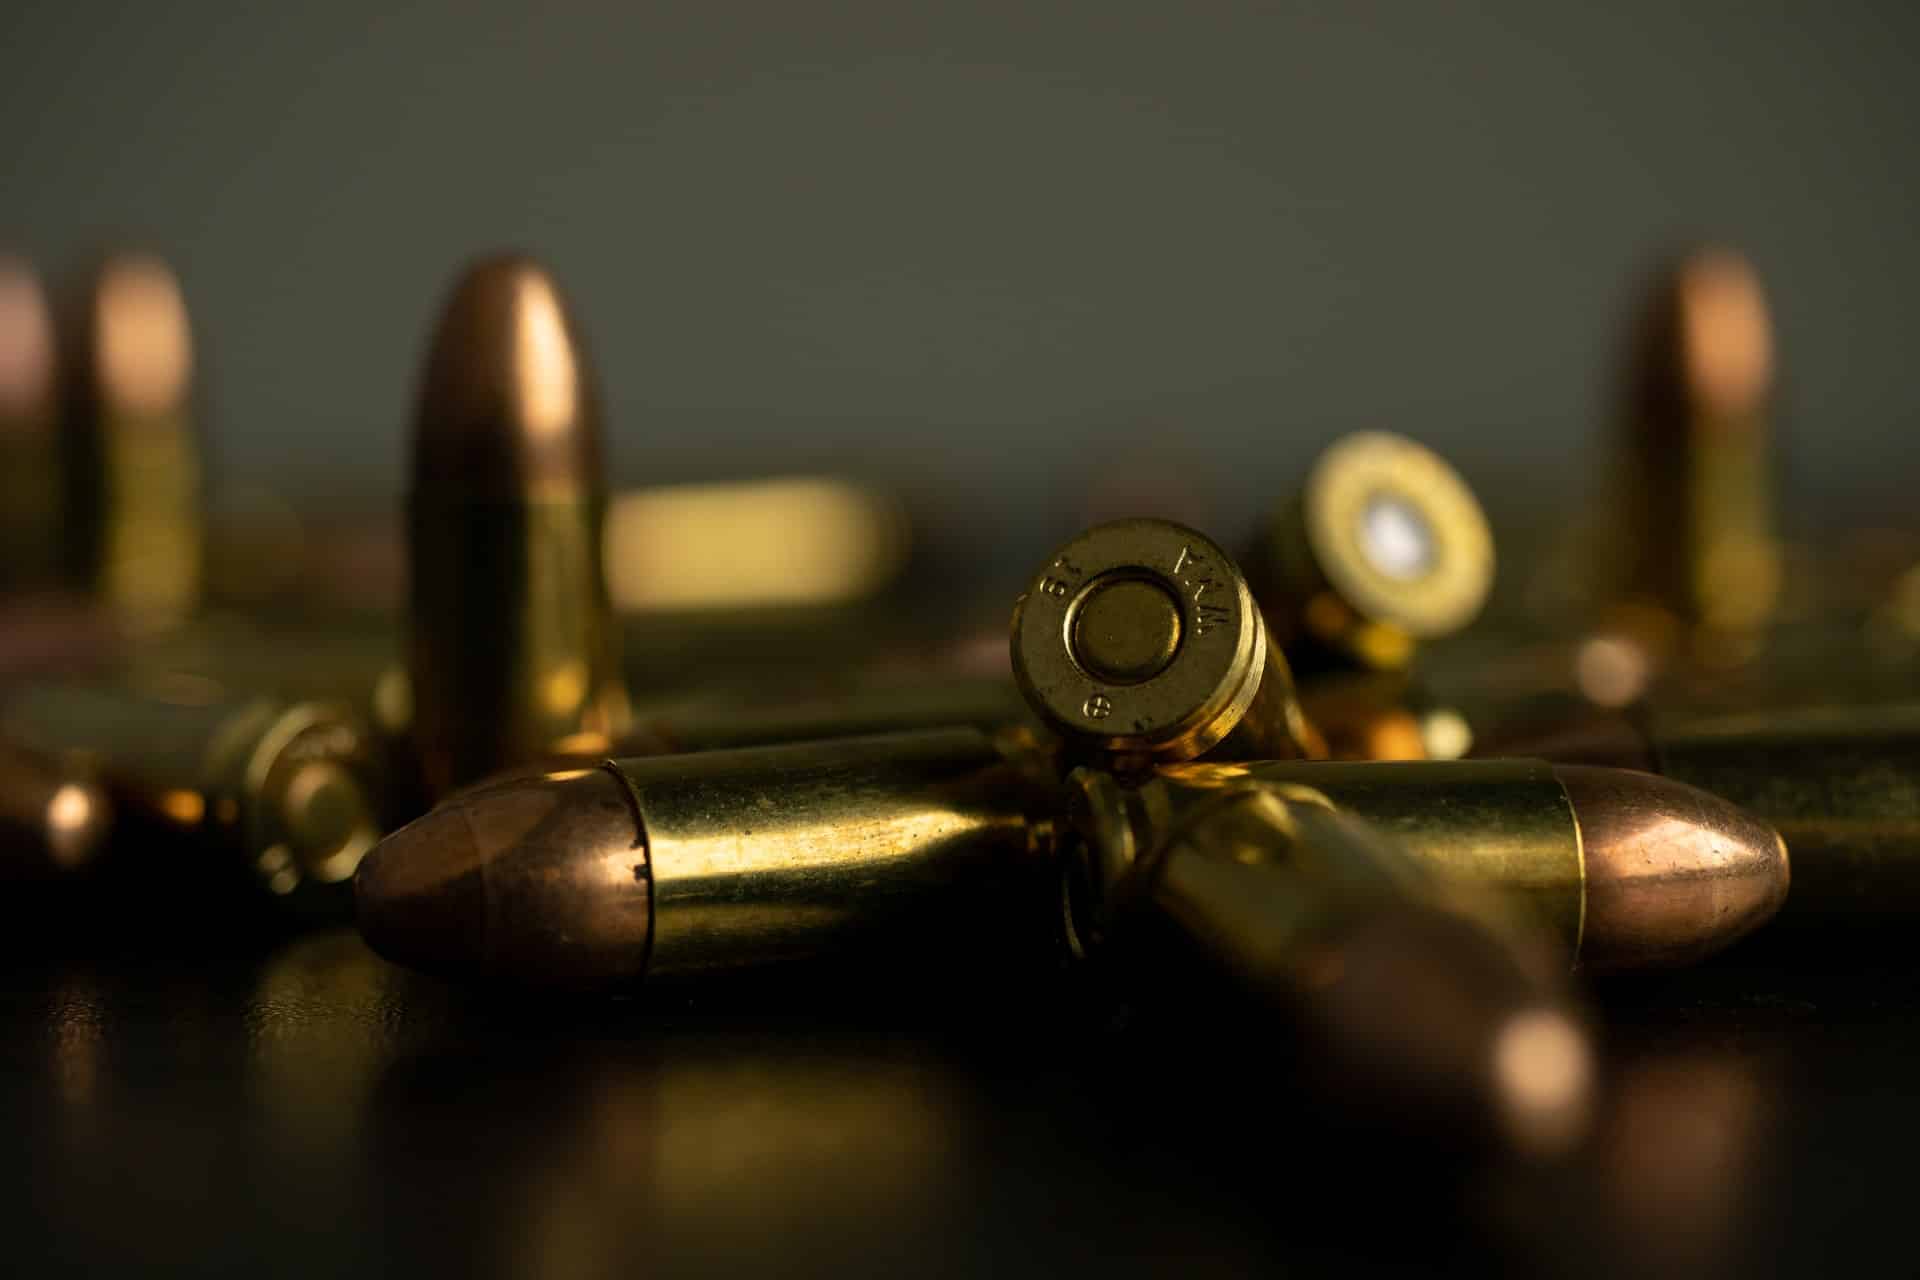 ammo on a table - firearm trafficking